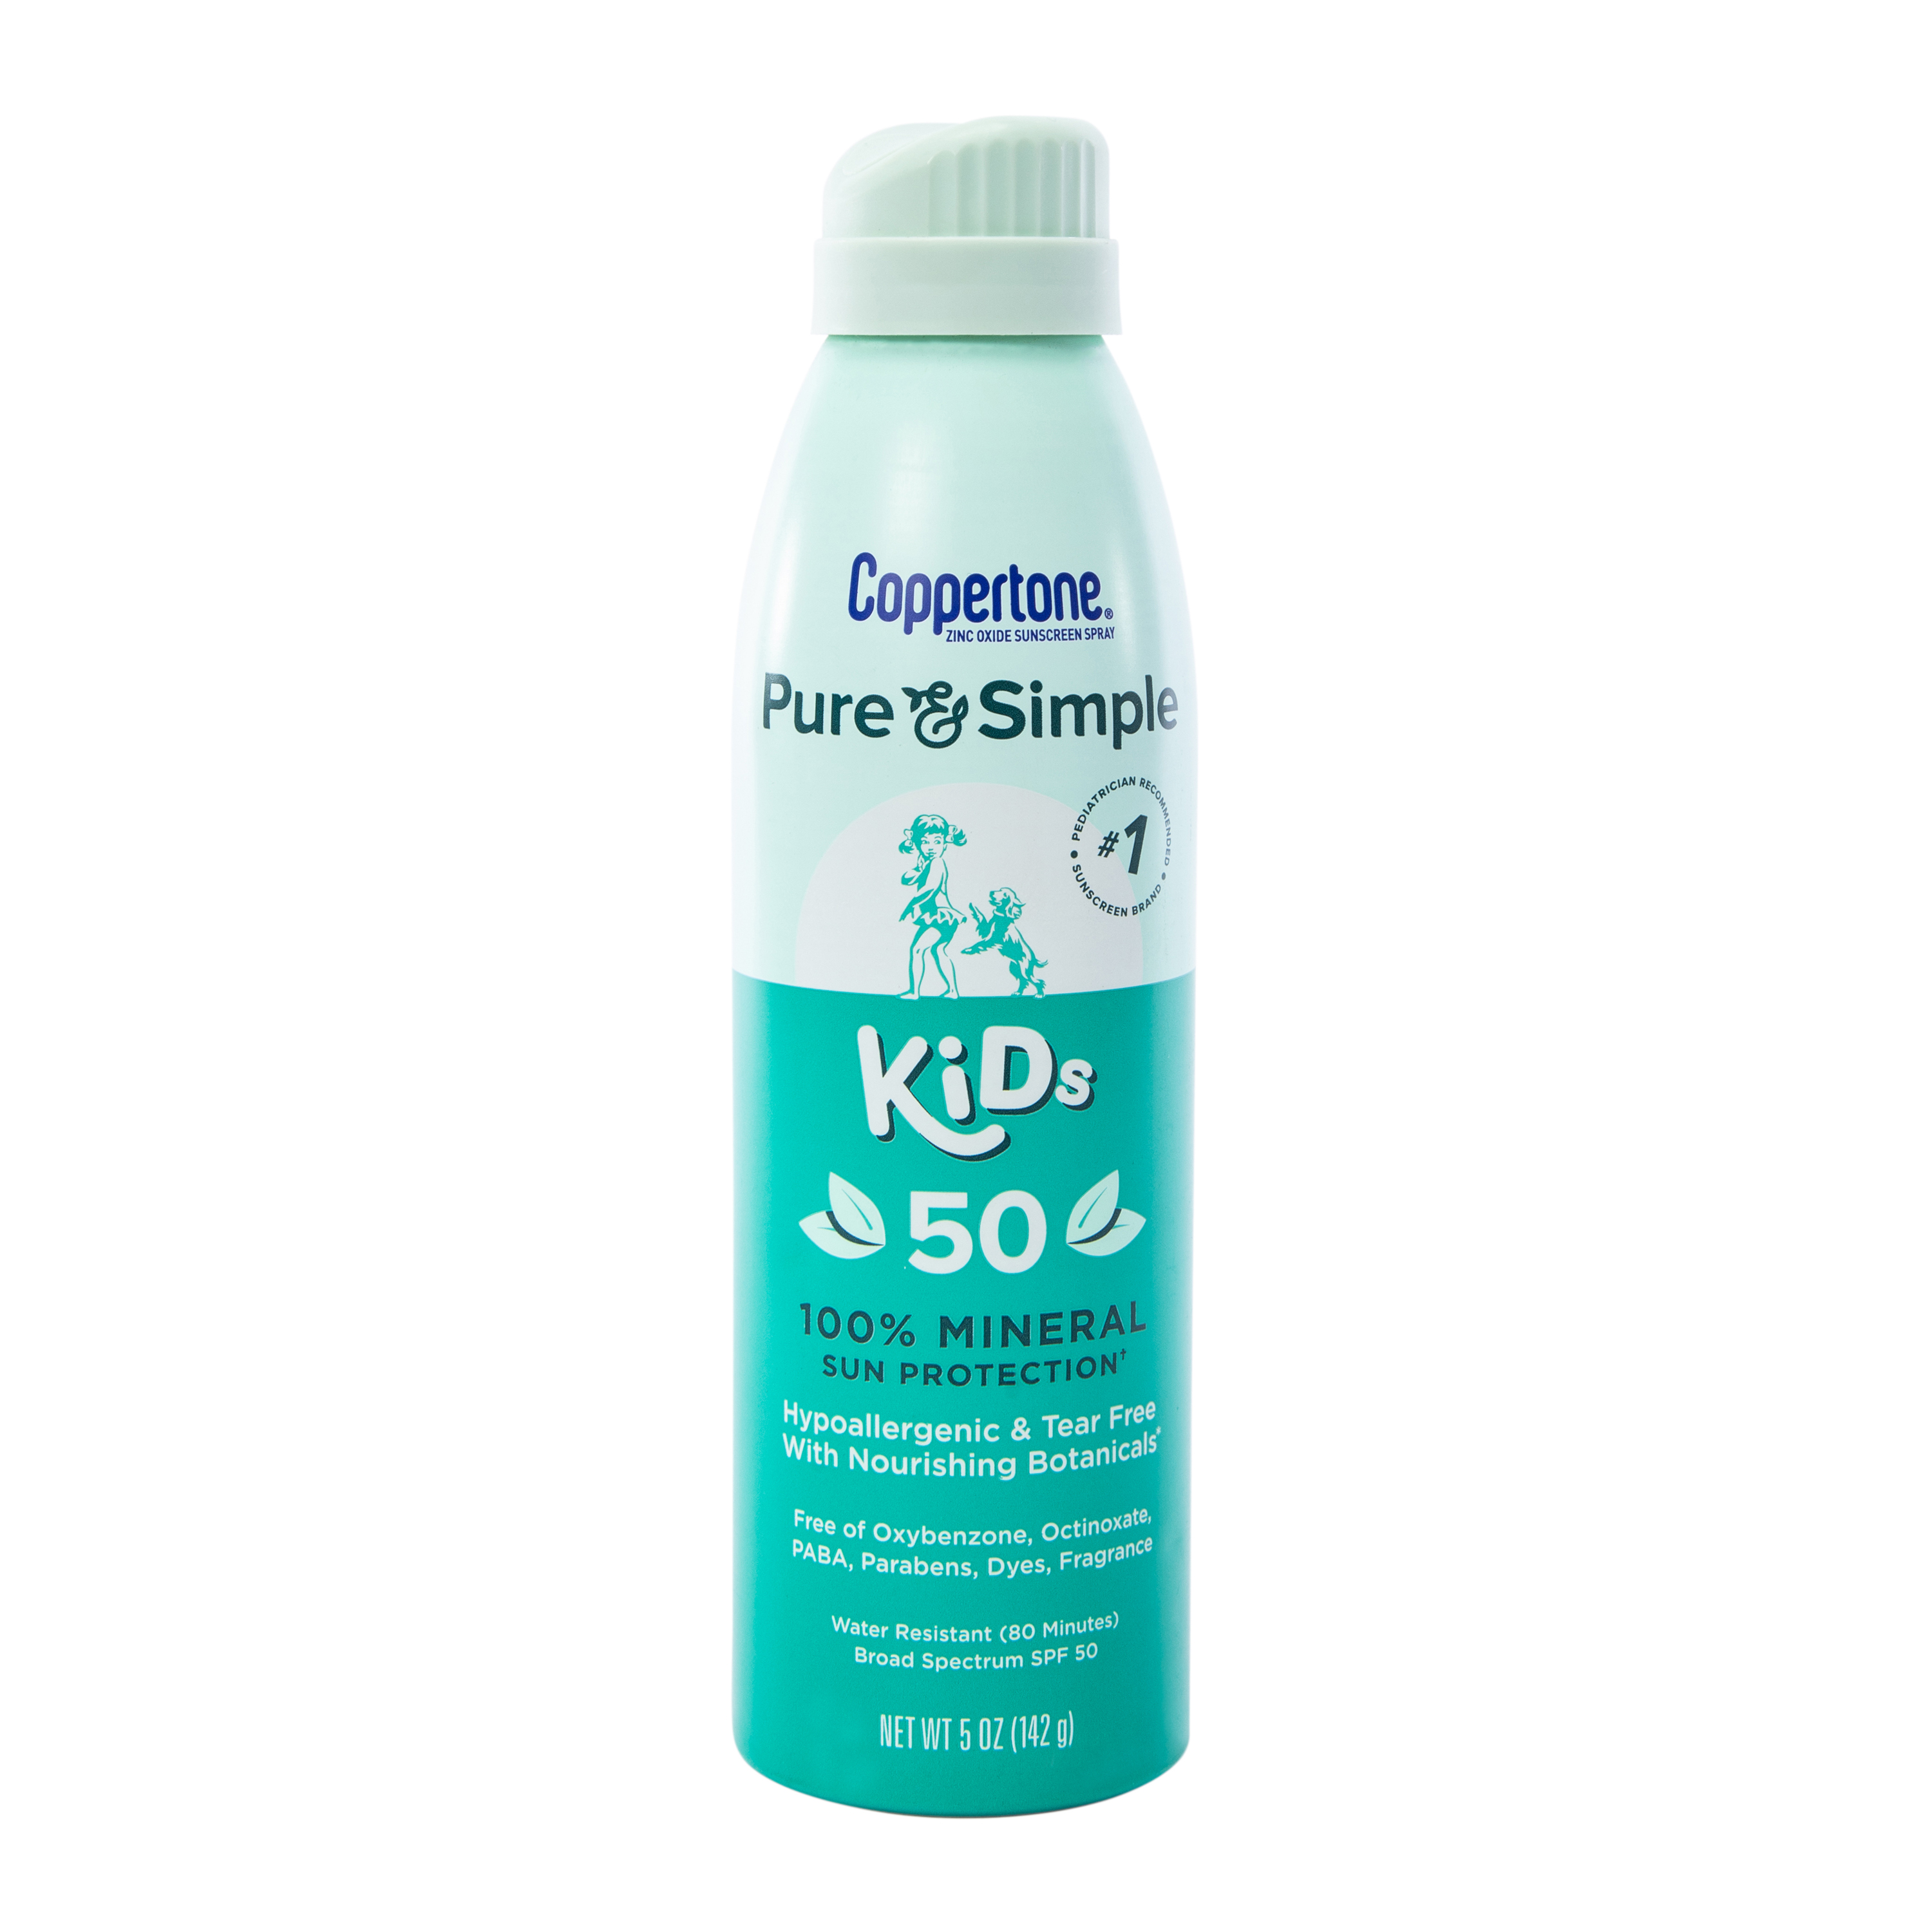 Coppertone® Pure & Simple SPF 50 Kid's Sunscreen Spray 5oz